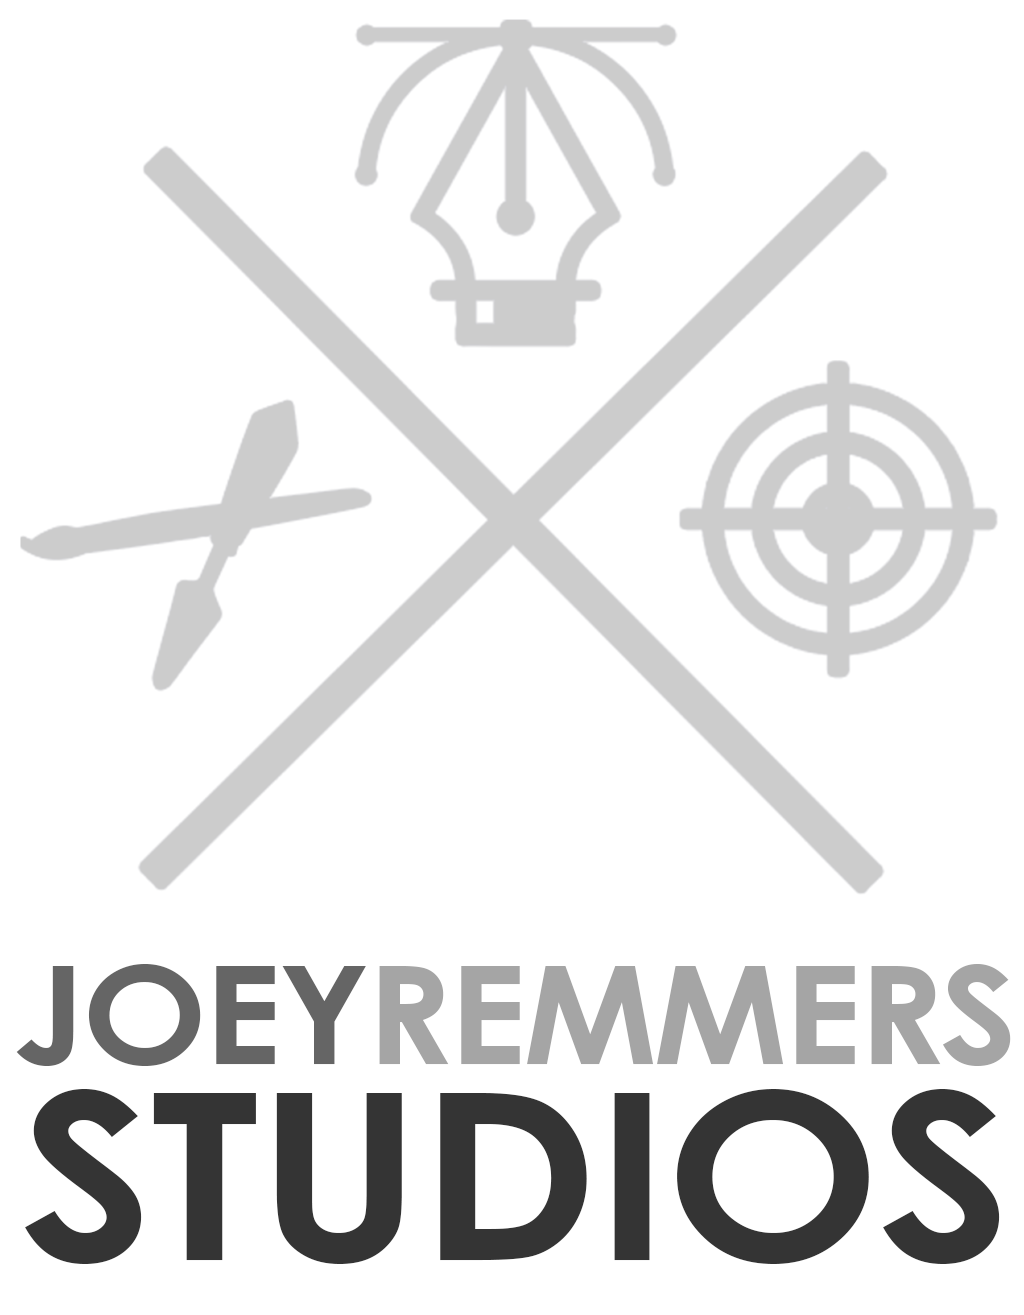 Joey Remmers Studios